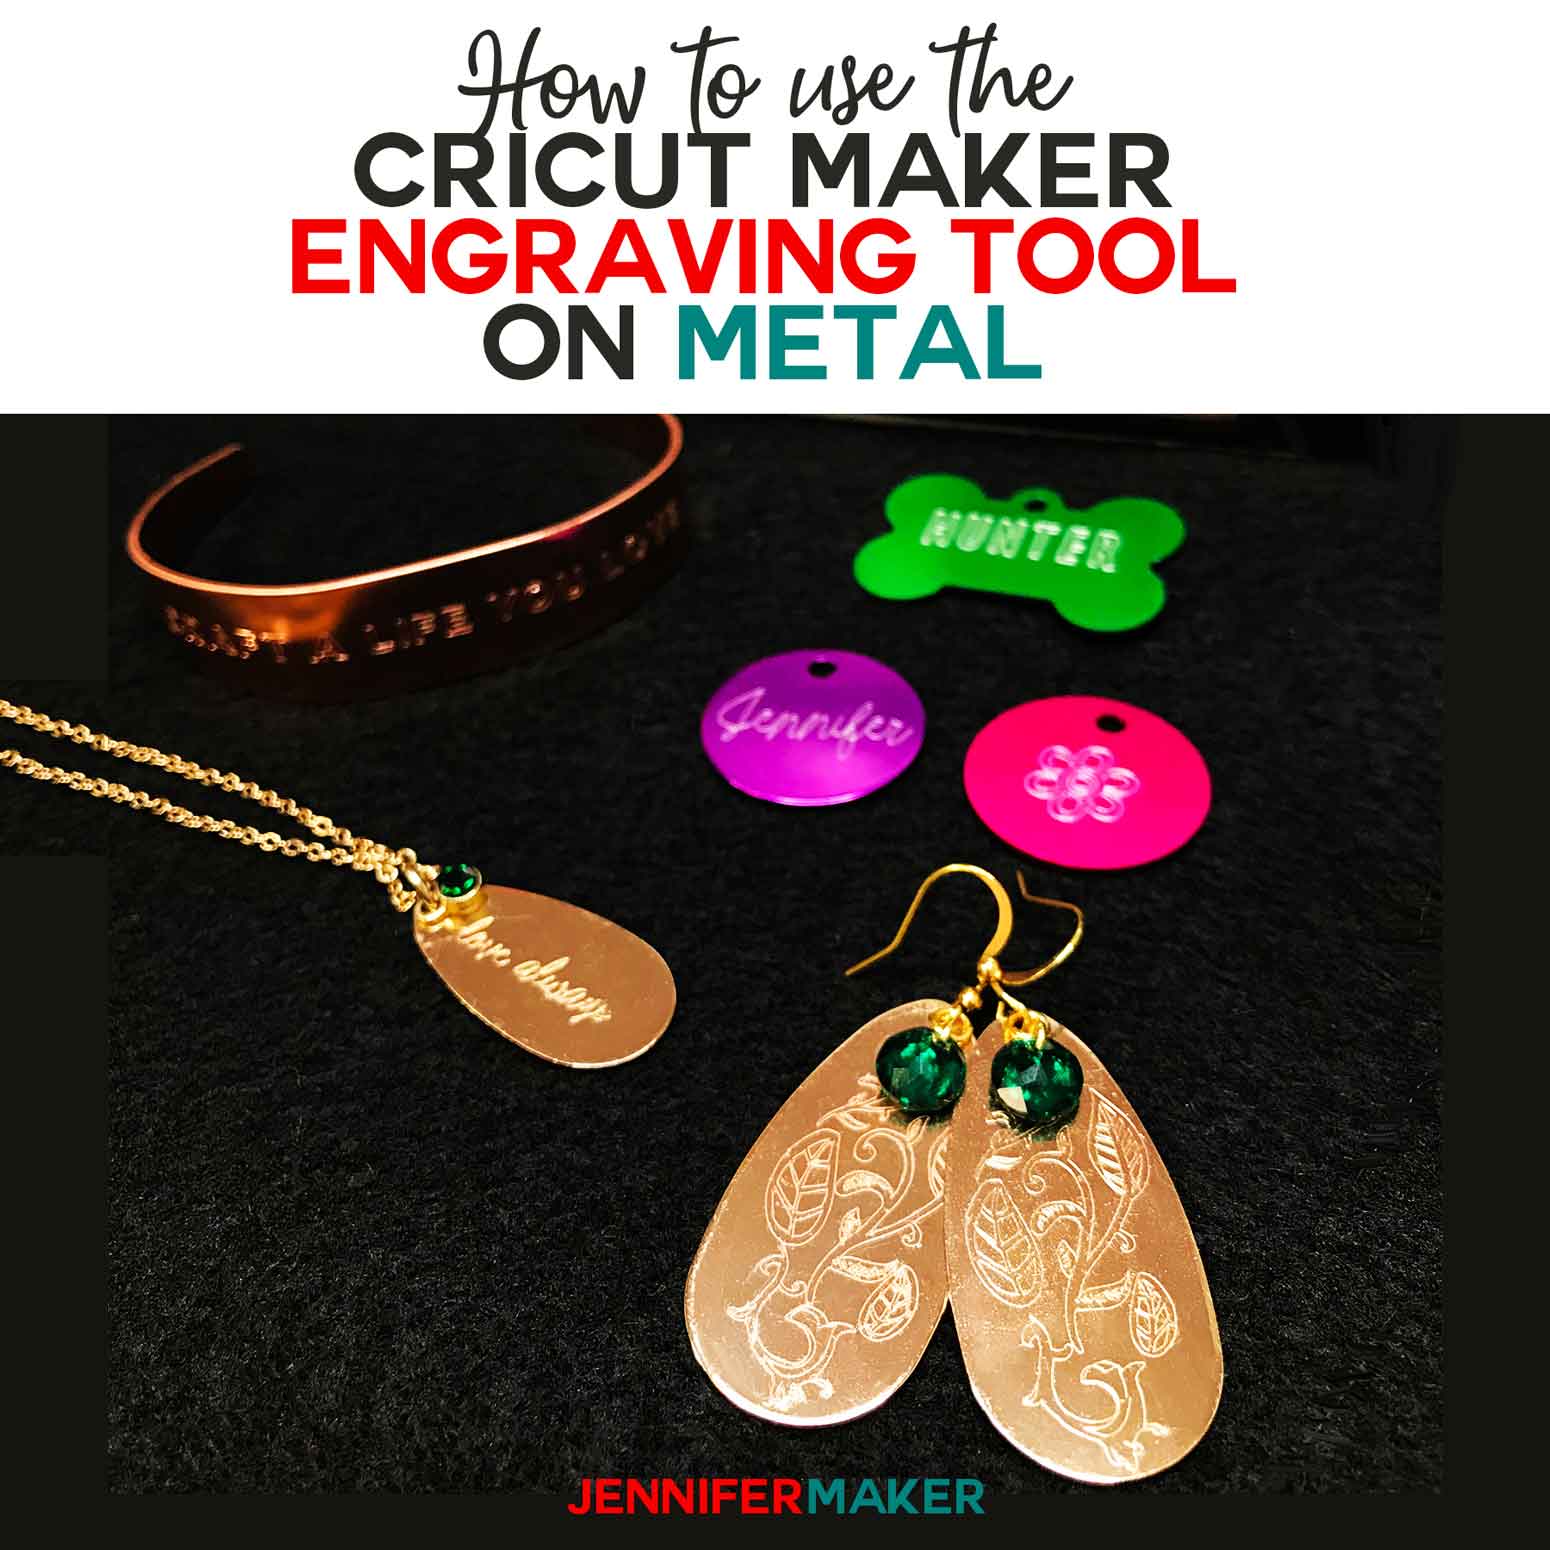 Cricut Maker Engraving Tool on Metal: Dog Tags, Bracelets, and Earrings!